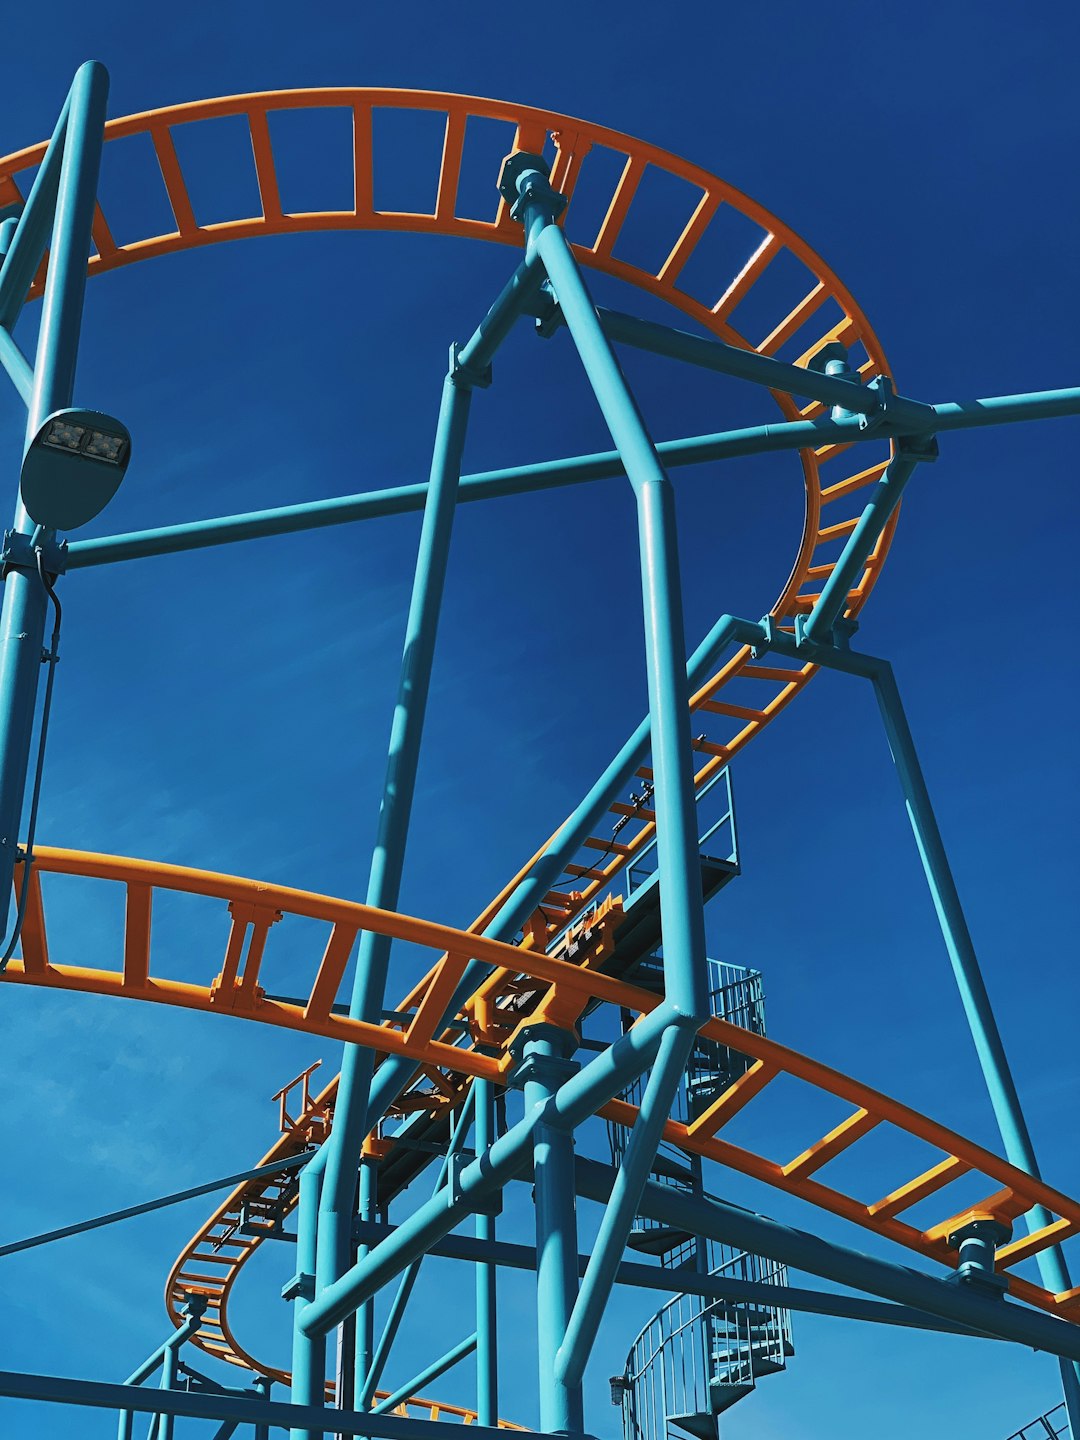 blue and orange amusement ride during daytime